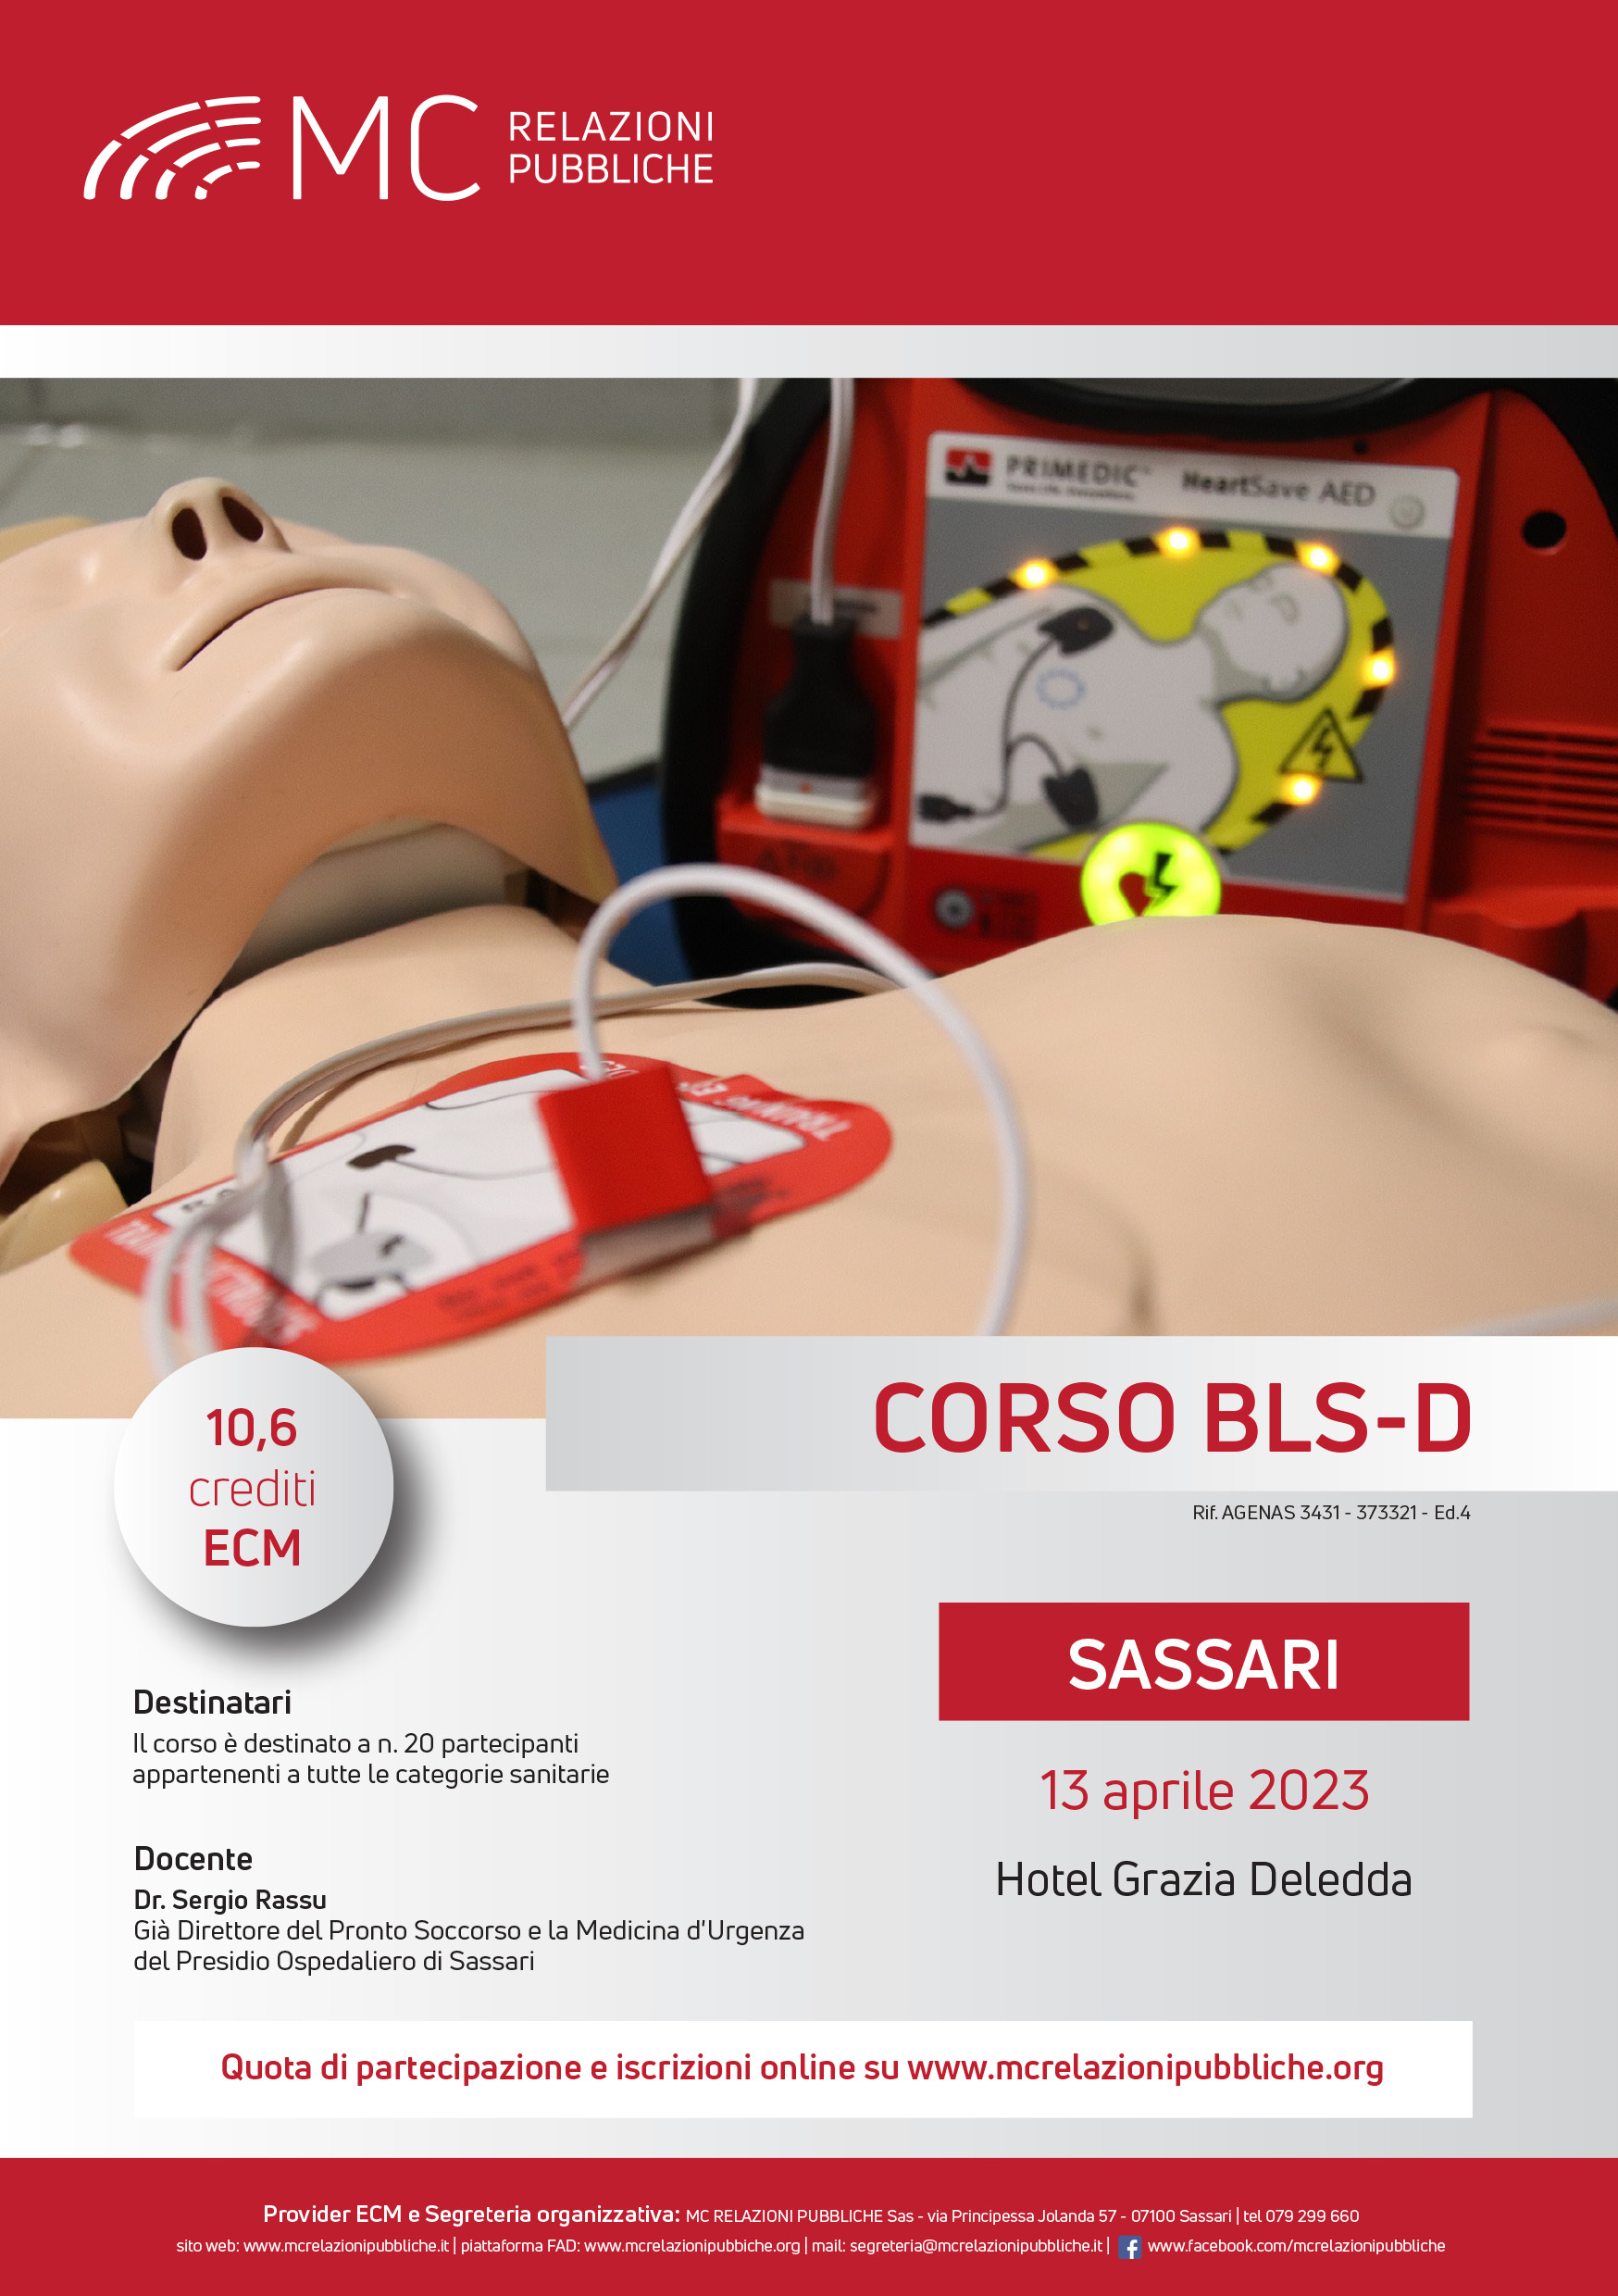 Corso BLS-D. Basic Life Support-Defibrillation - 13 aprile 2023